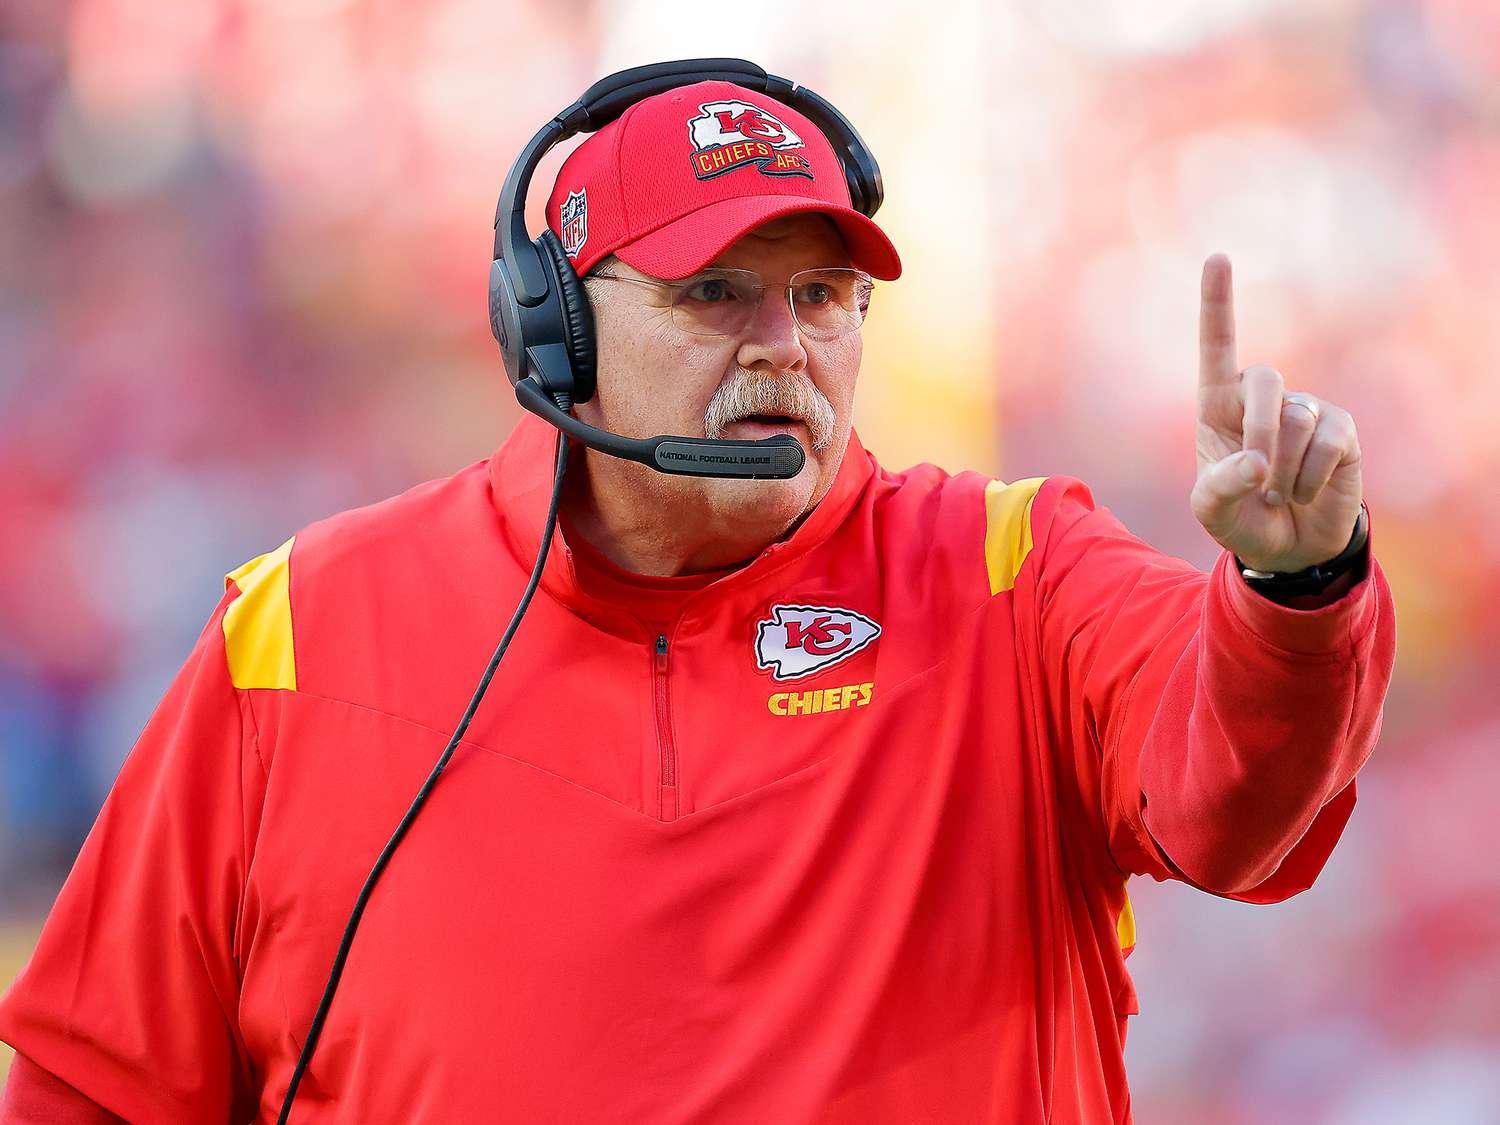  Can Andy Reid Surpass Bill Belichick Inside the Chiefs Coach's Pursuit of NFL Legend Status